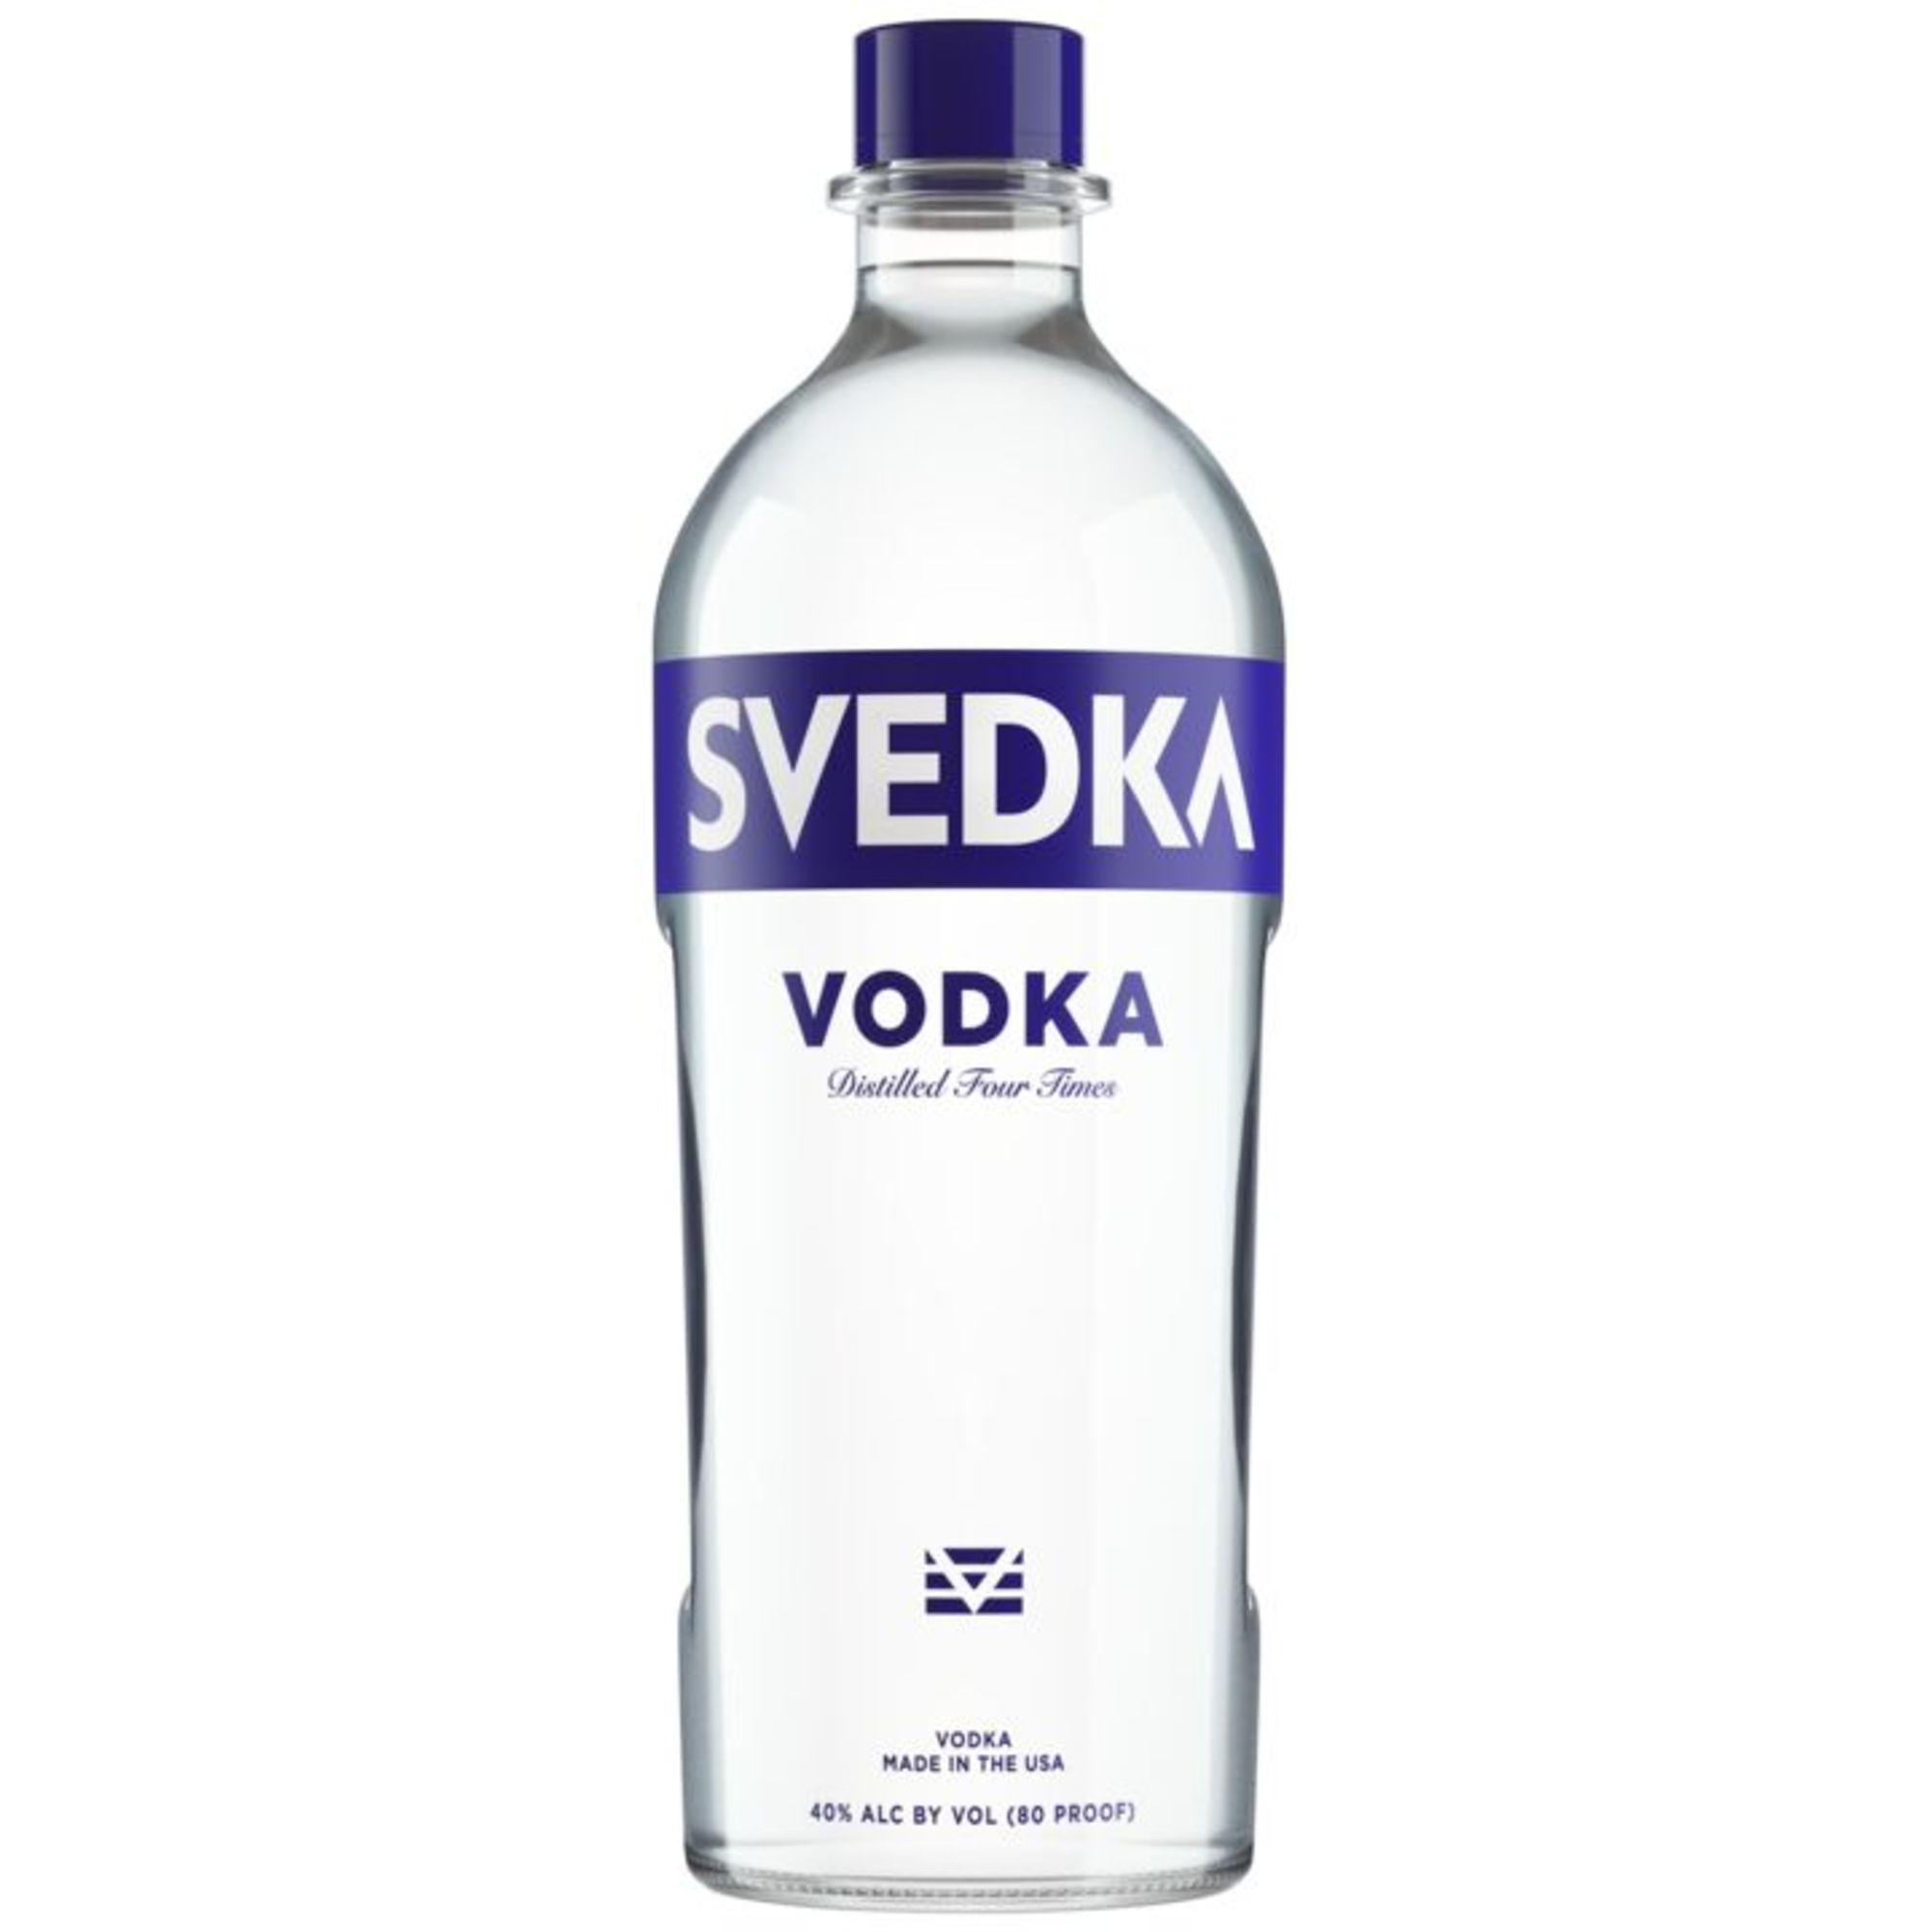 SVEDKA Vodka, 1.75 L Bottle, 80 Proof